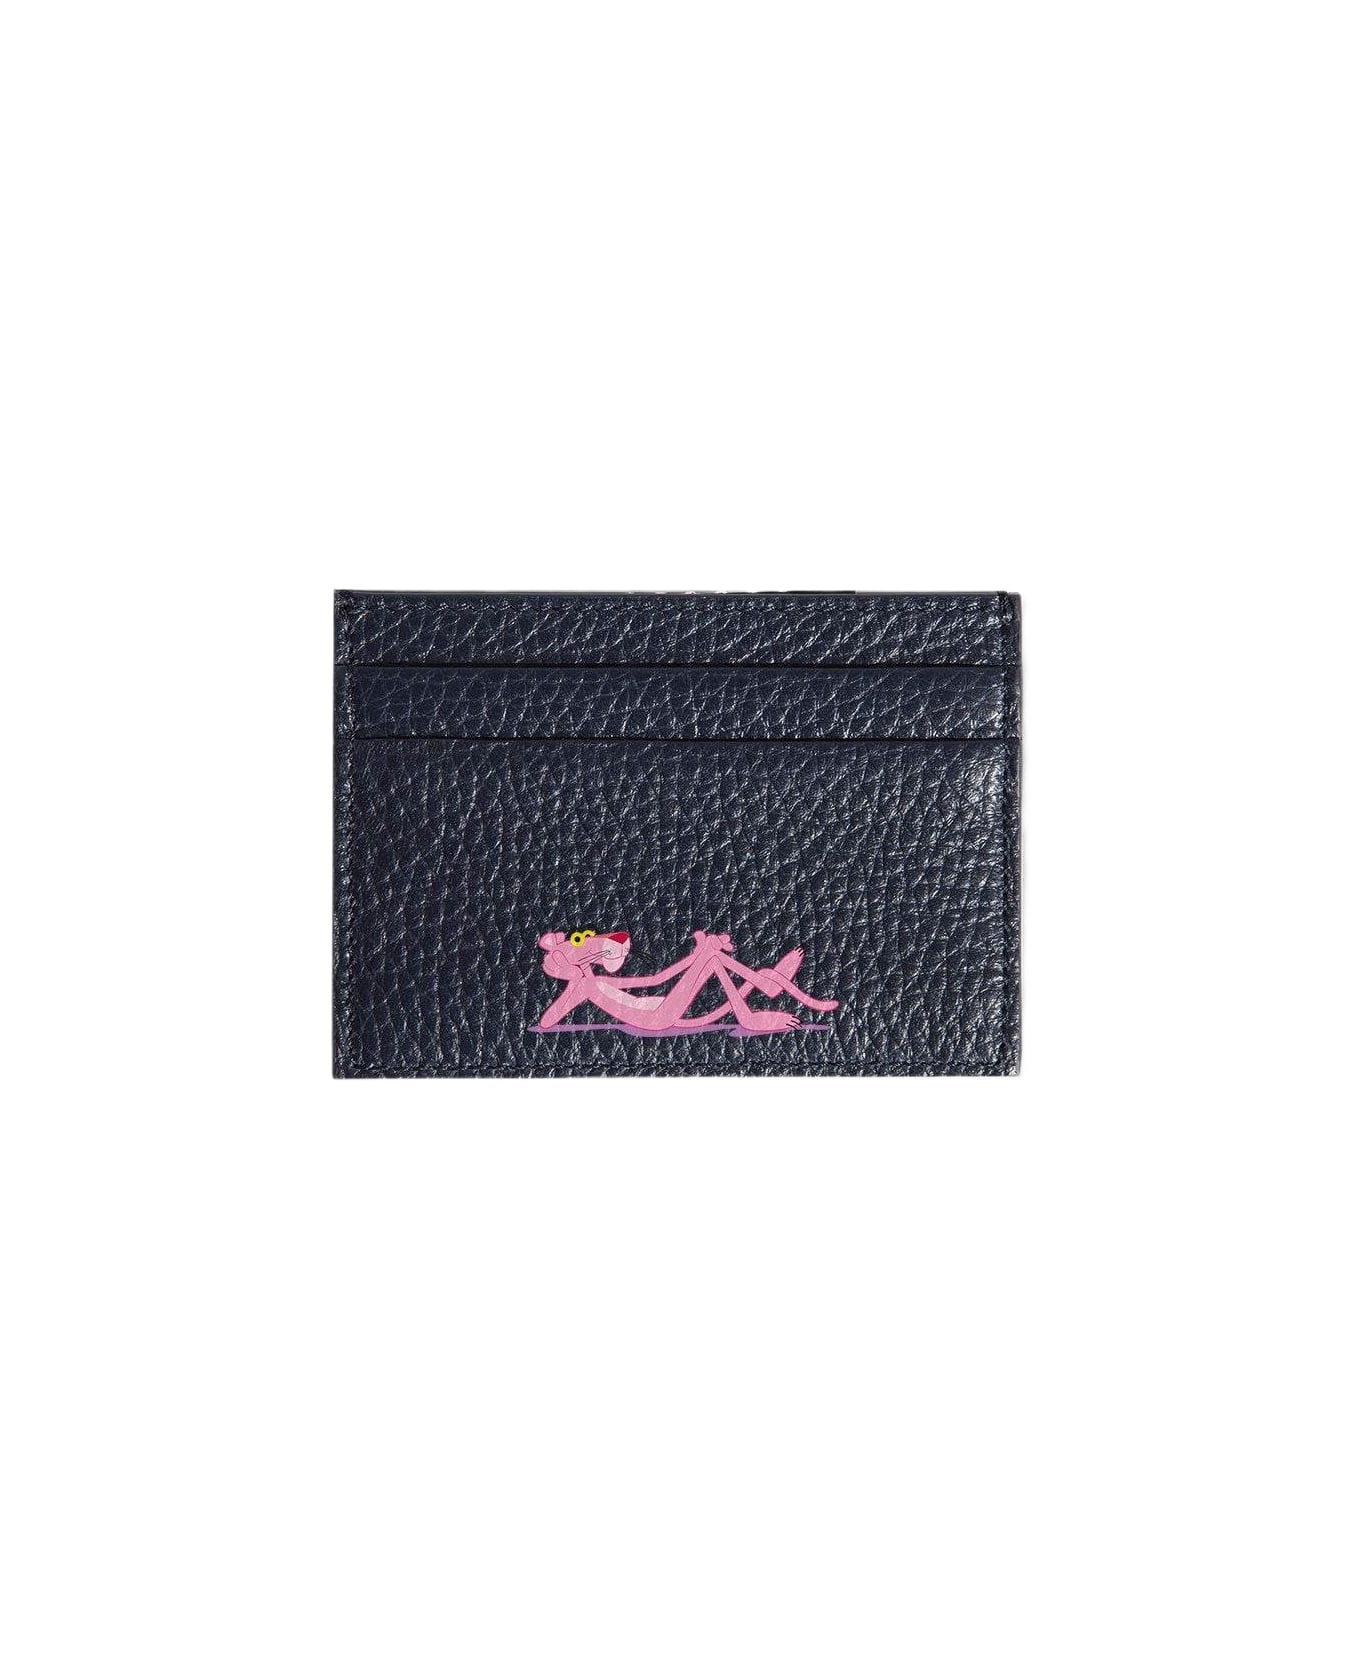 Larusmiani Card Holder 'pink Panther' Wallet - Navy